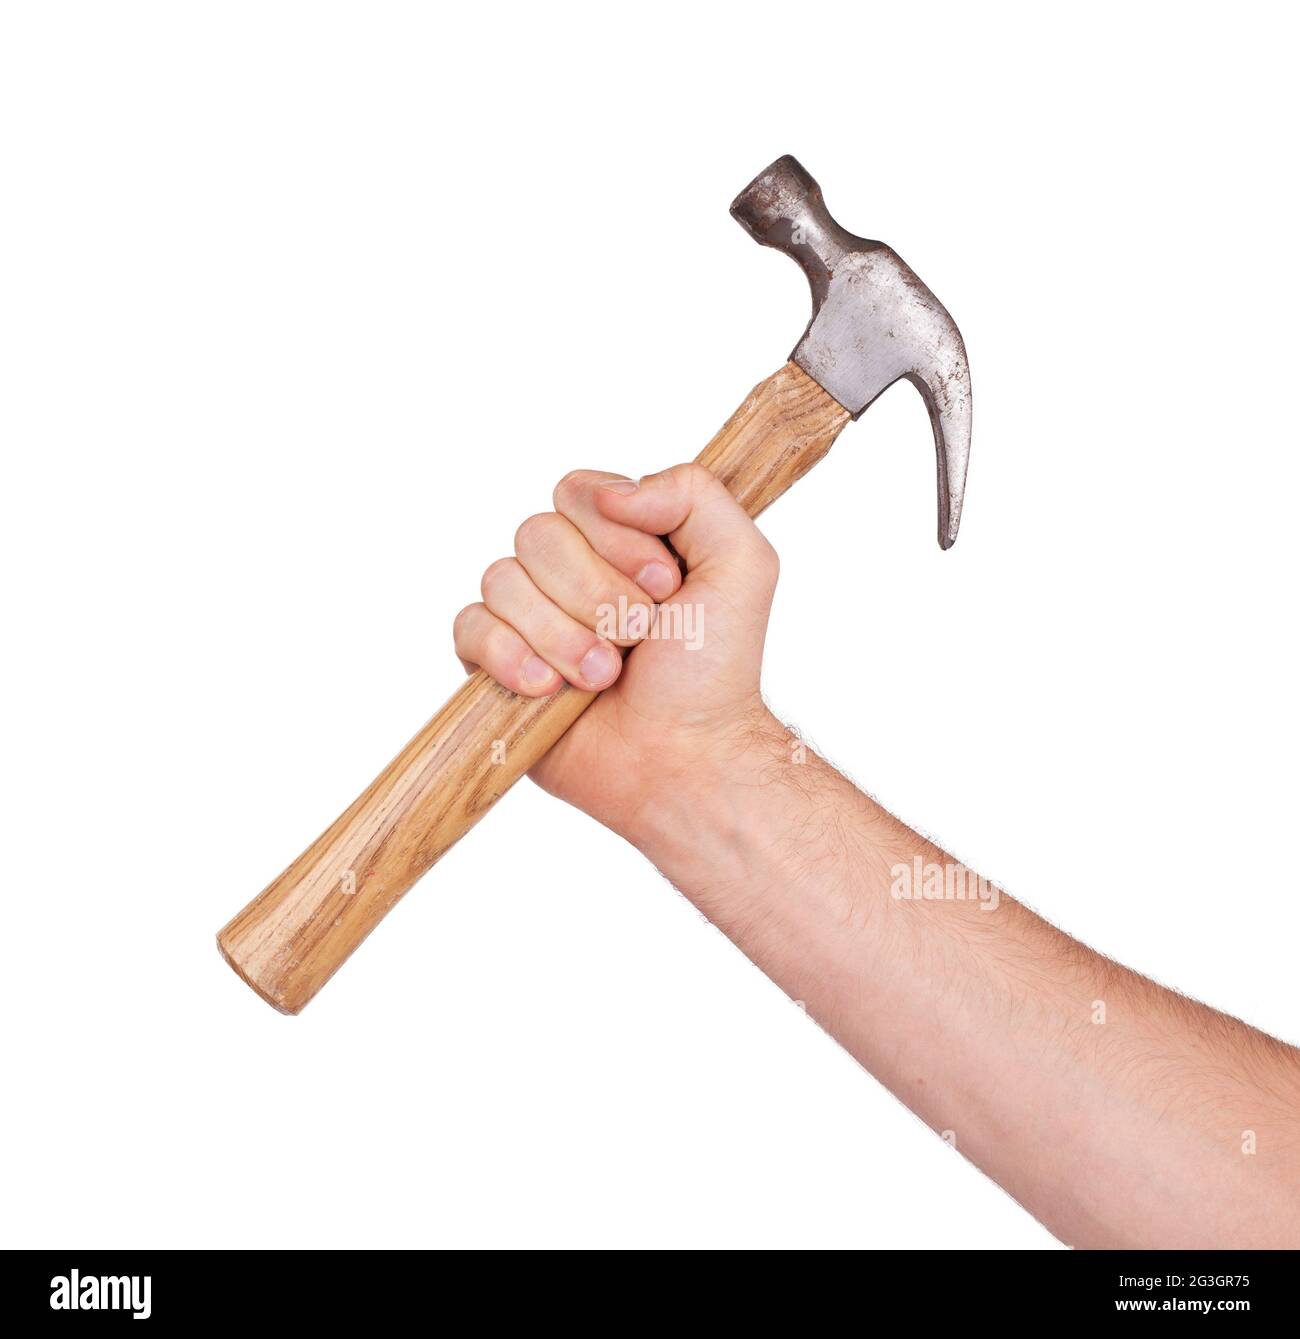 hand holding hammer Stock Photo - Alamy